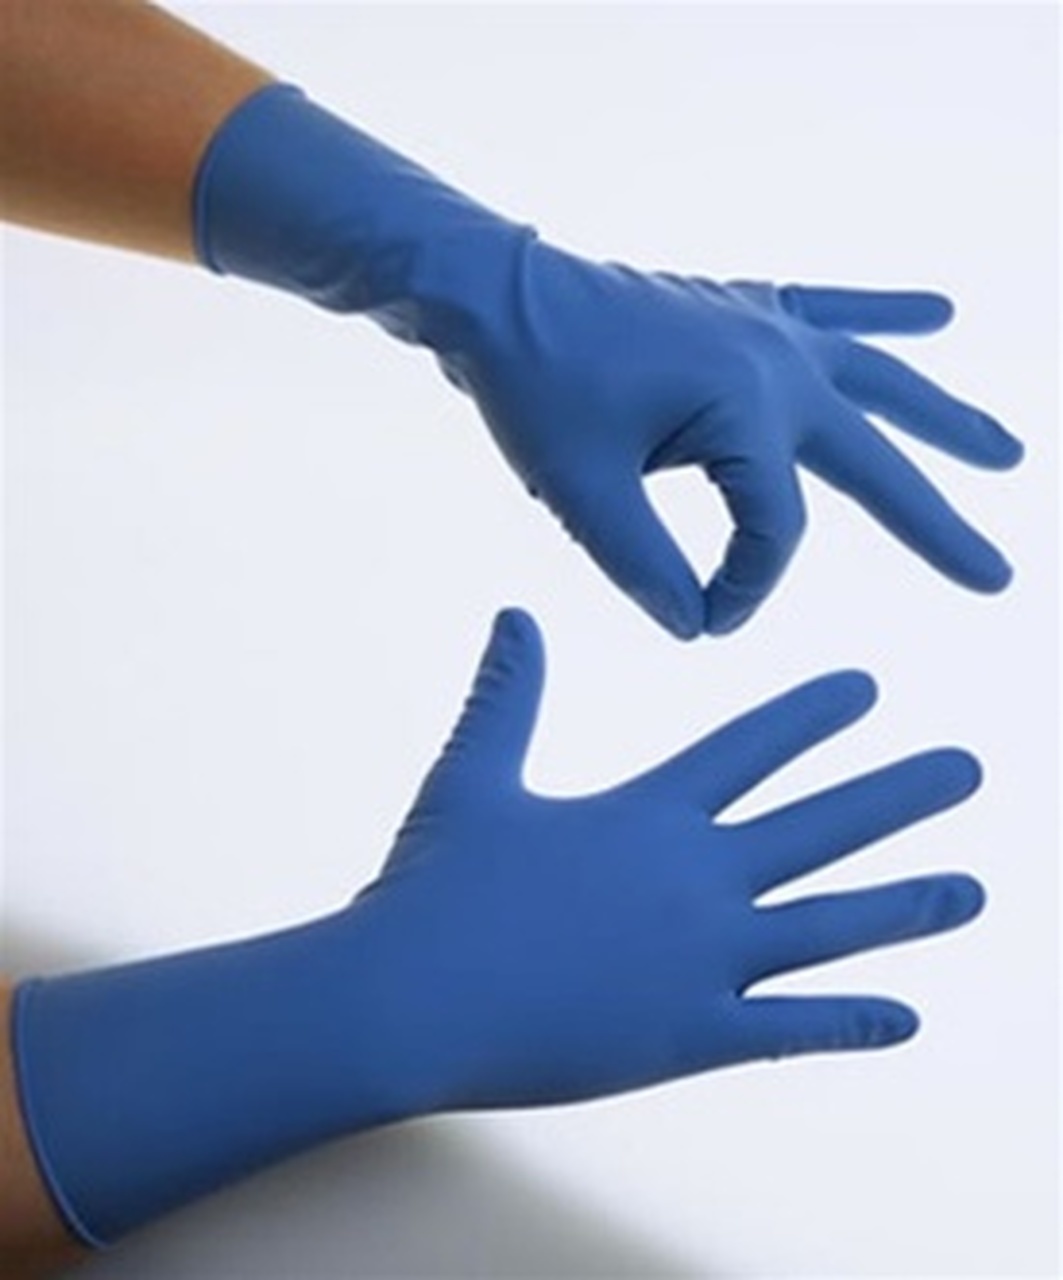 Latex gloves threesome